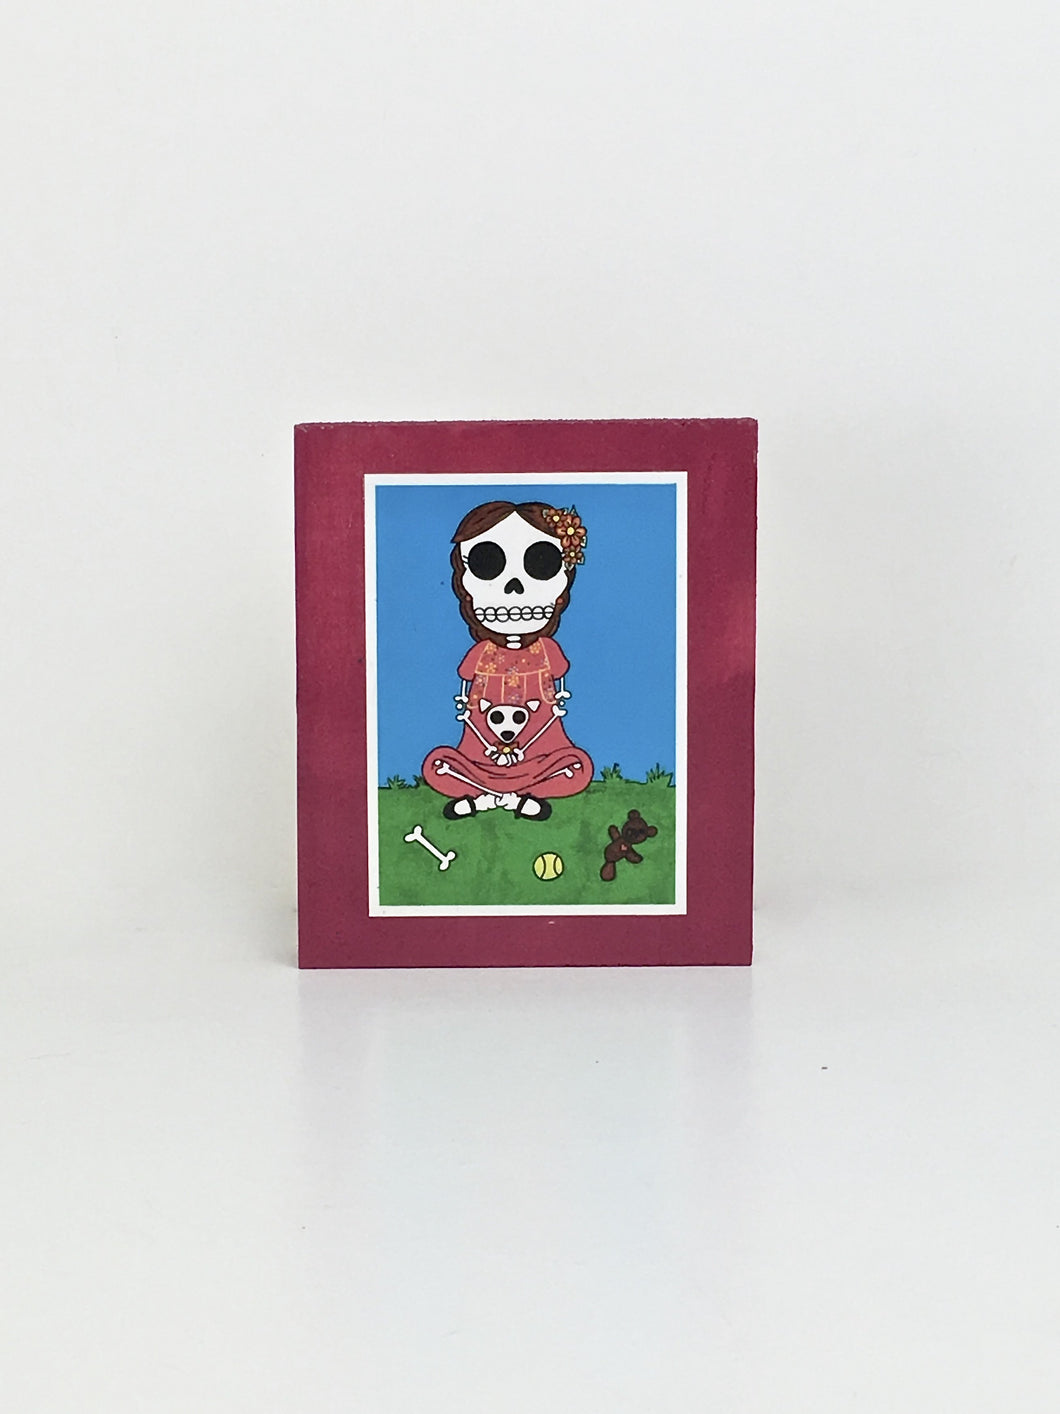 Girl and dog friend dia de muertos inspired handcrafted pop art frame by Ninoska Arte